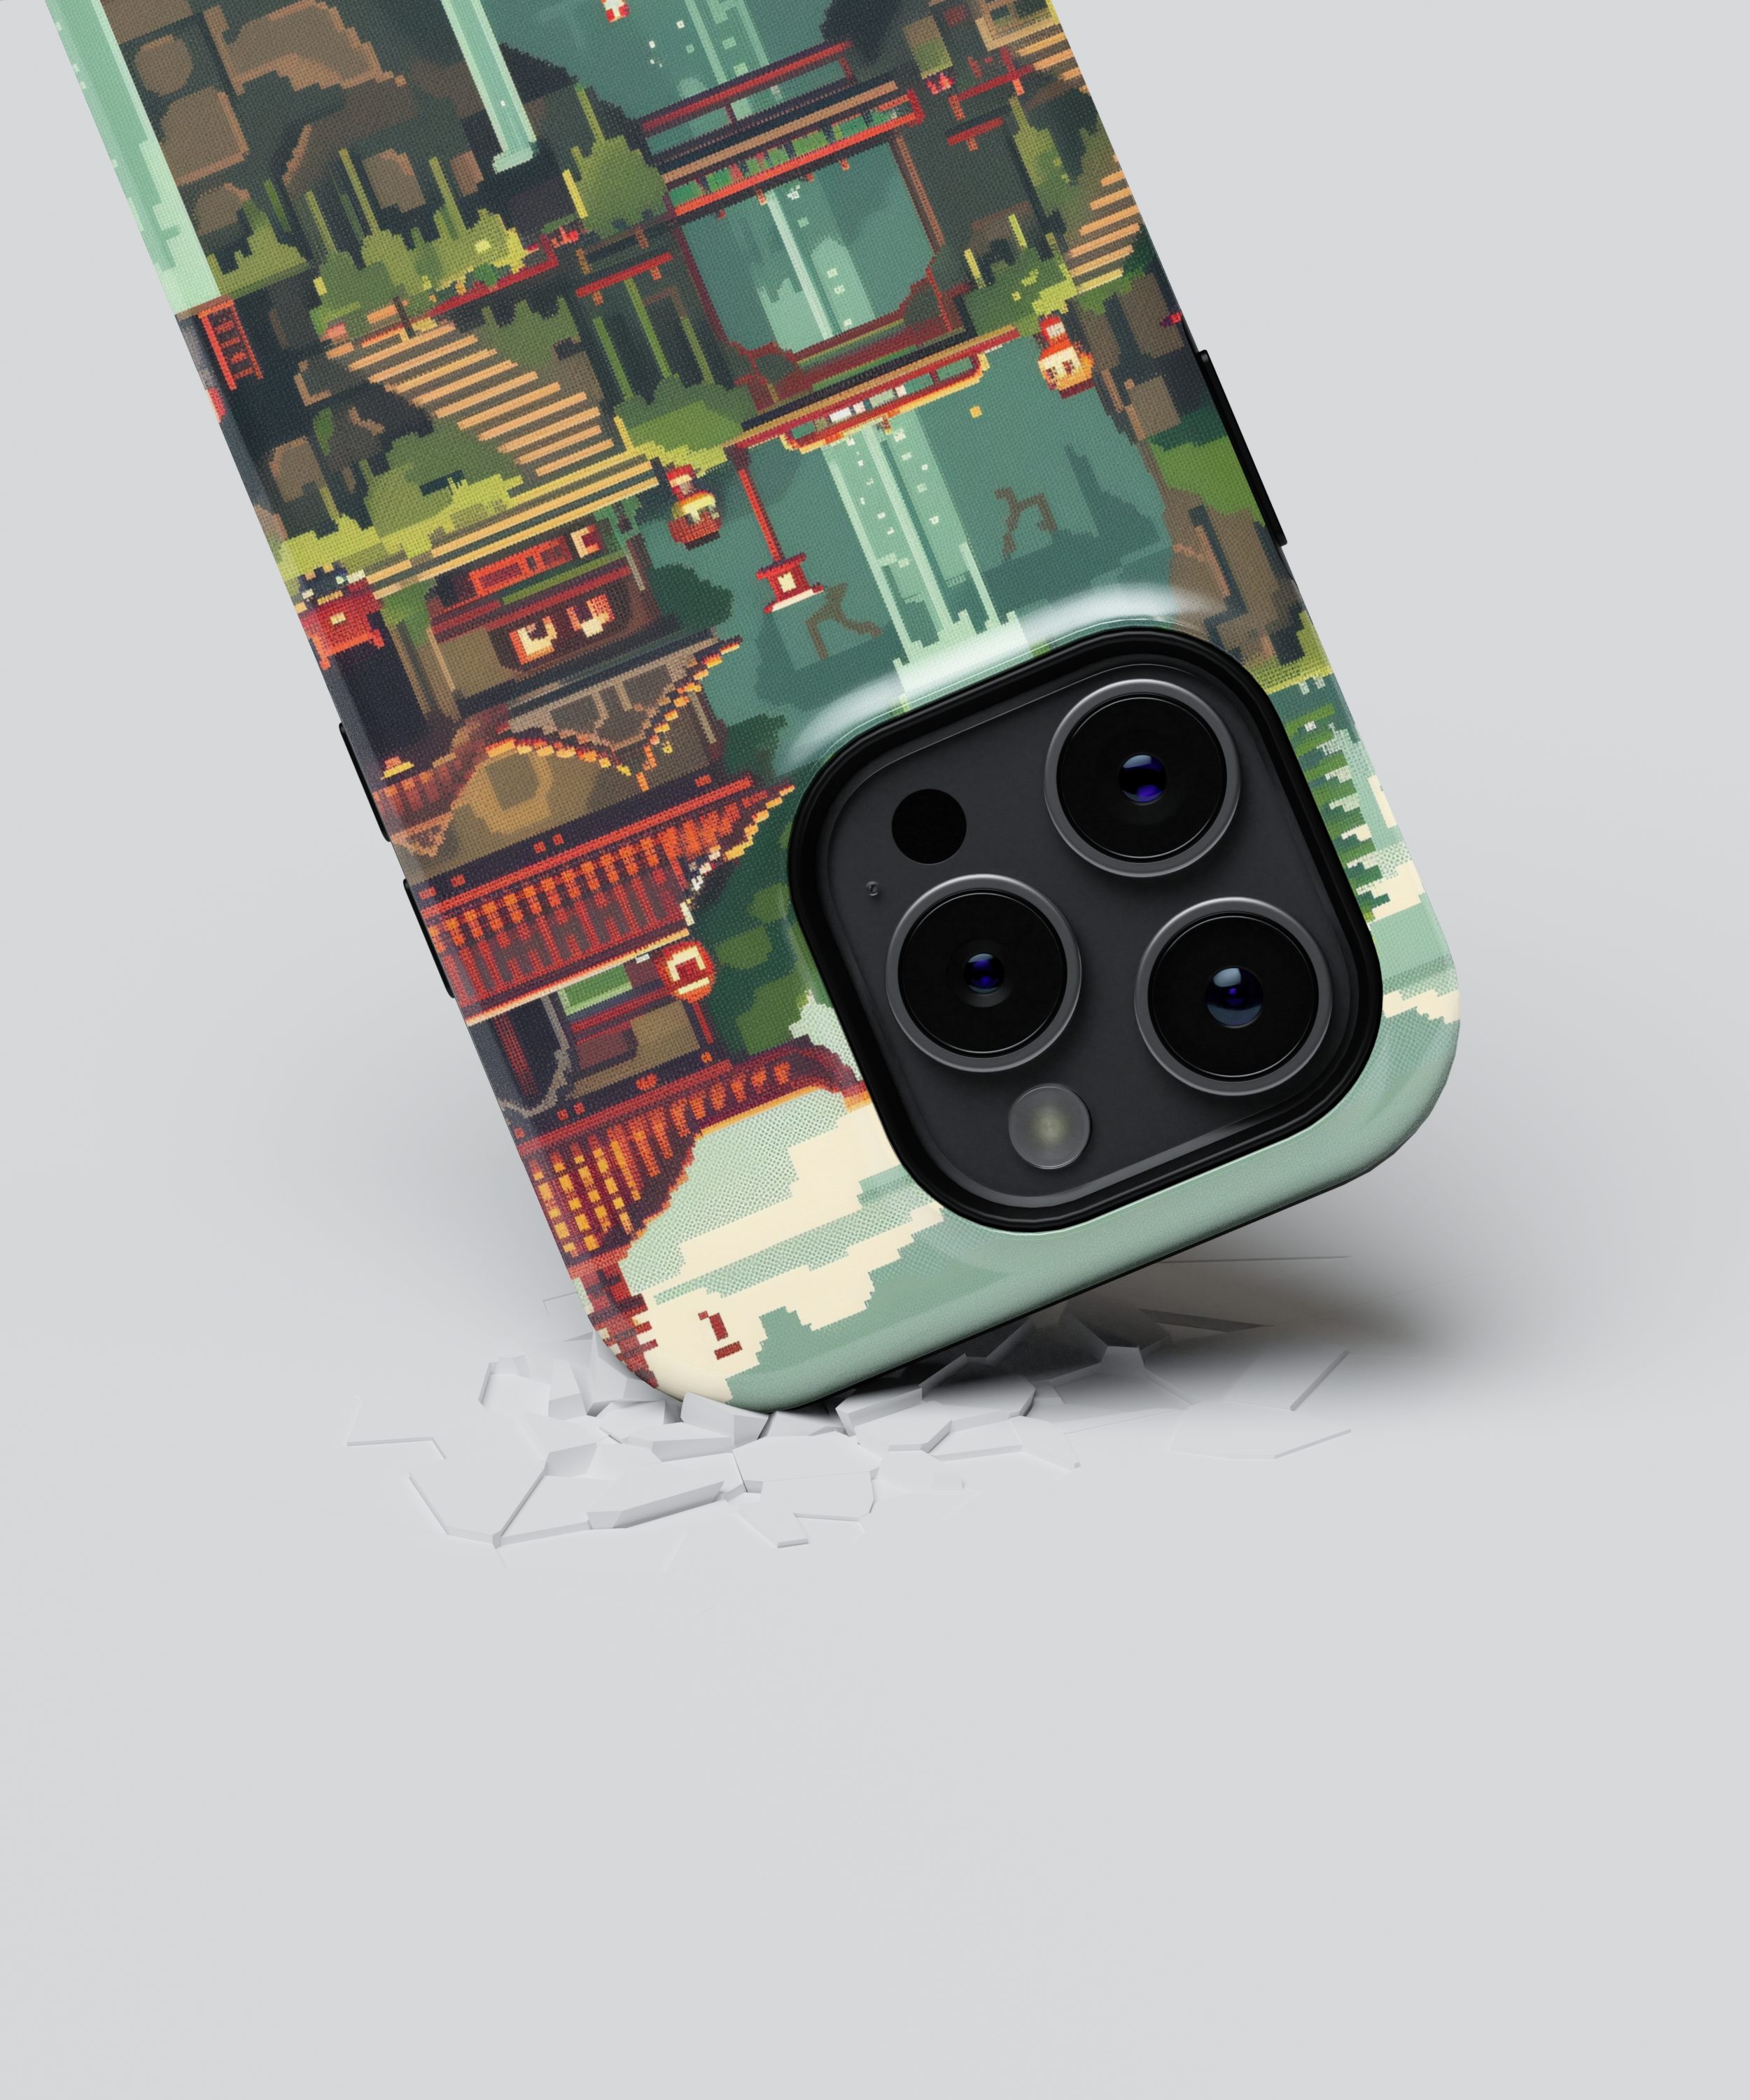 iPhone Tough Case - Pixel Pinnacle Arcade - CASETEROID